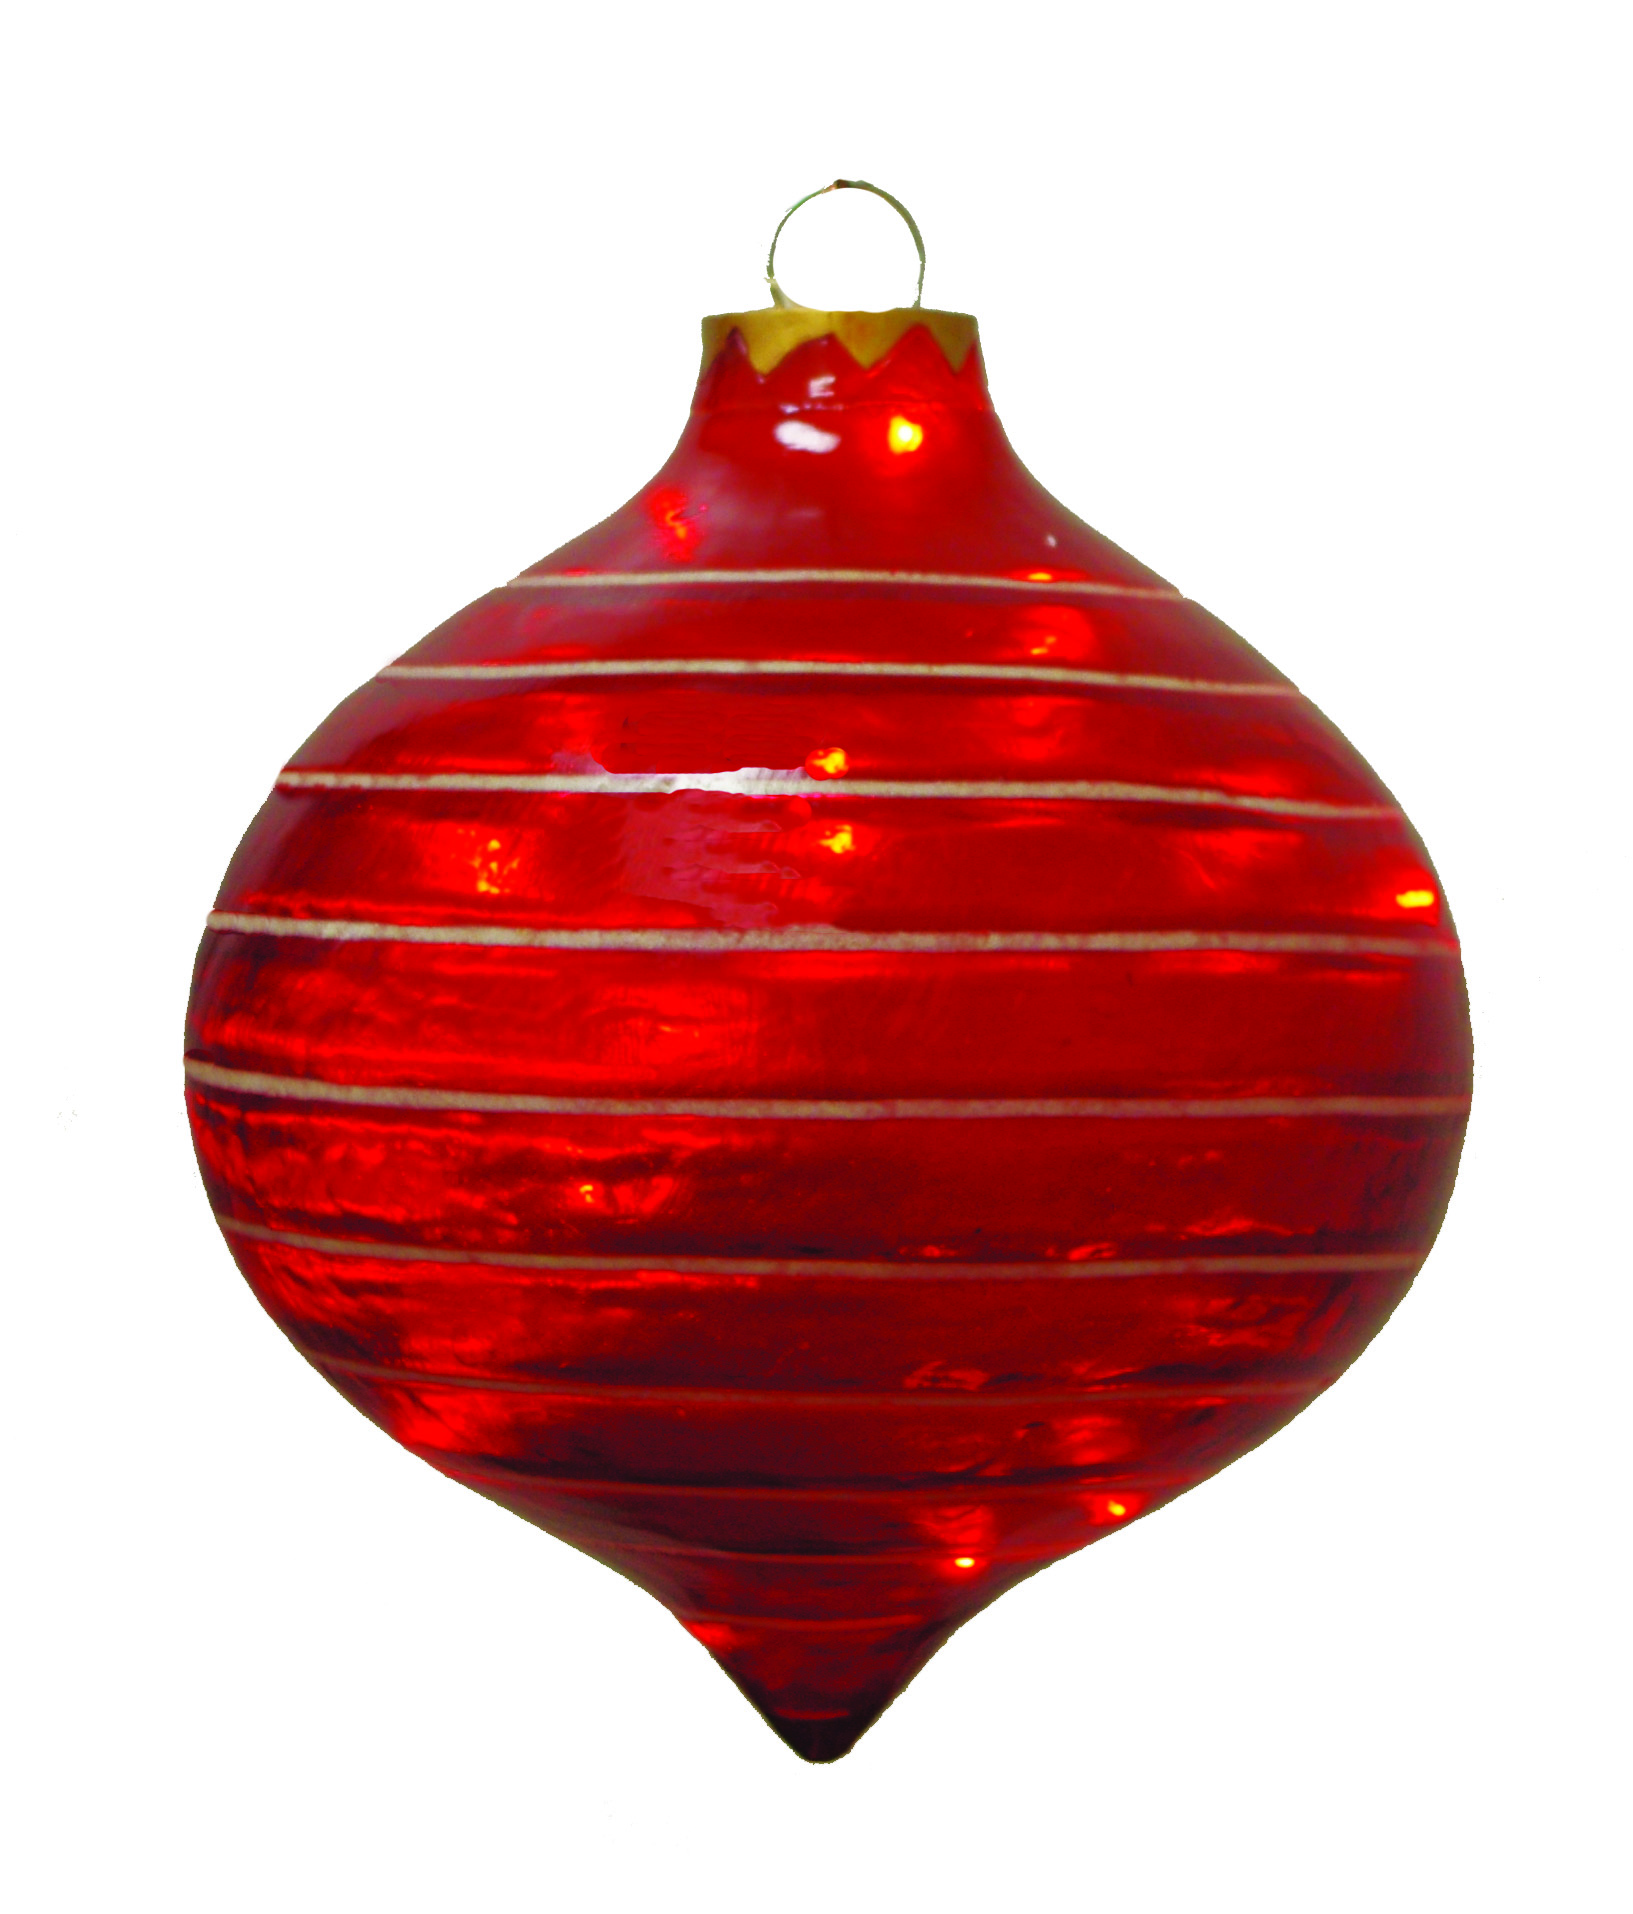 Illuminated Red Sandstone Top Ornament